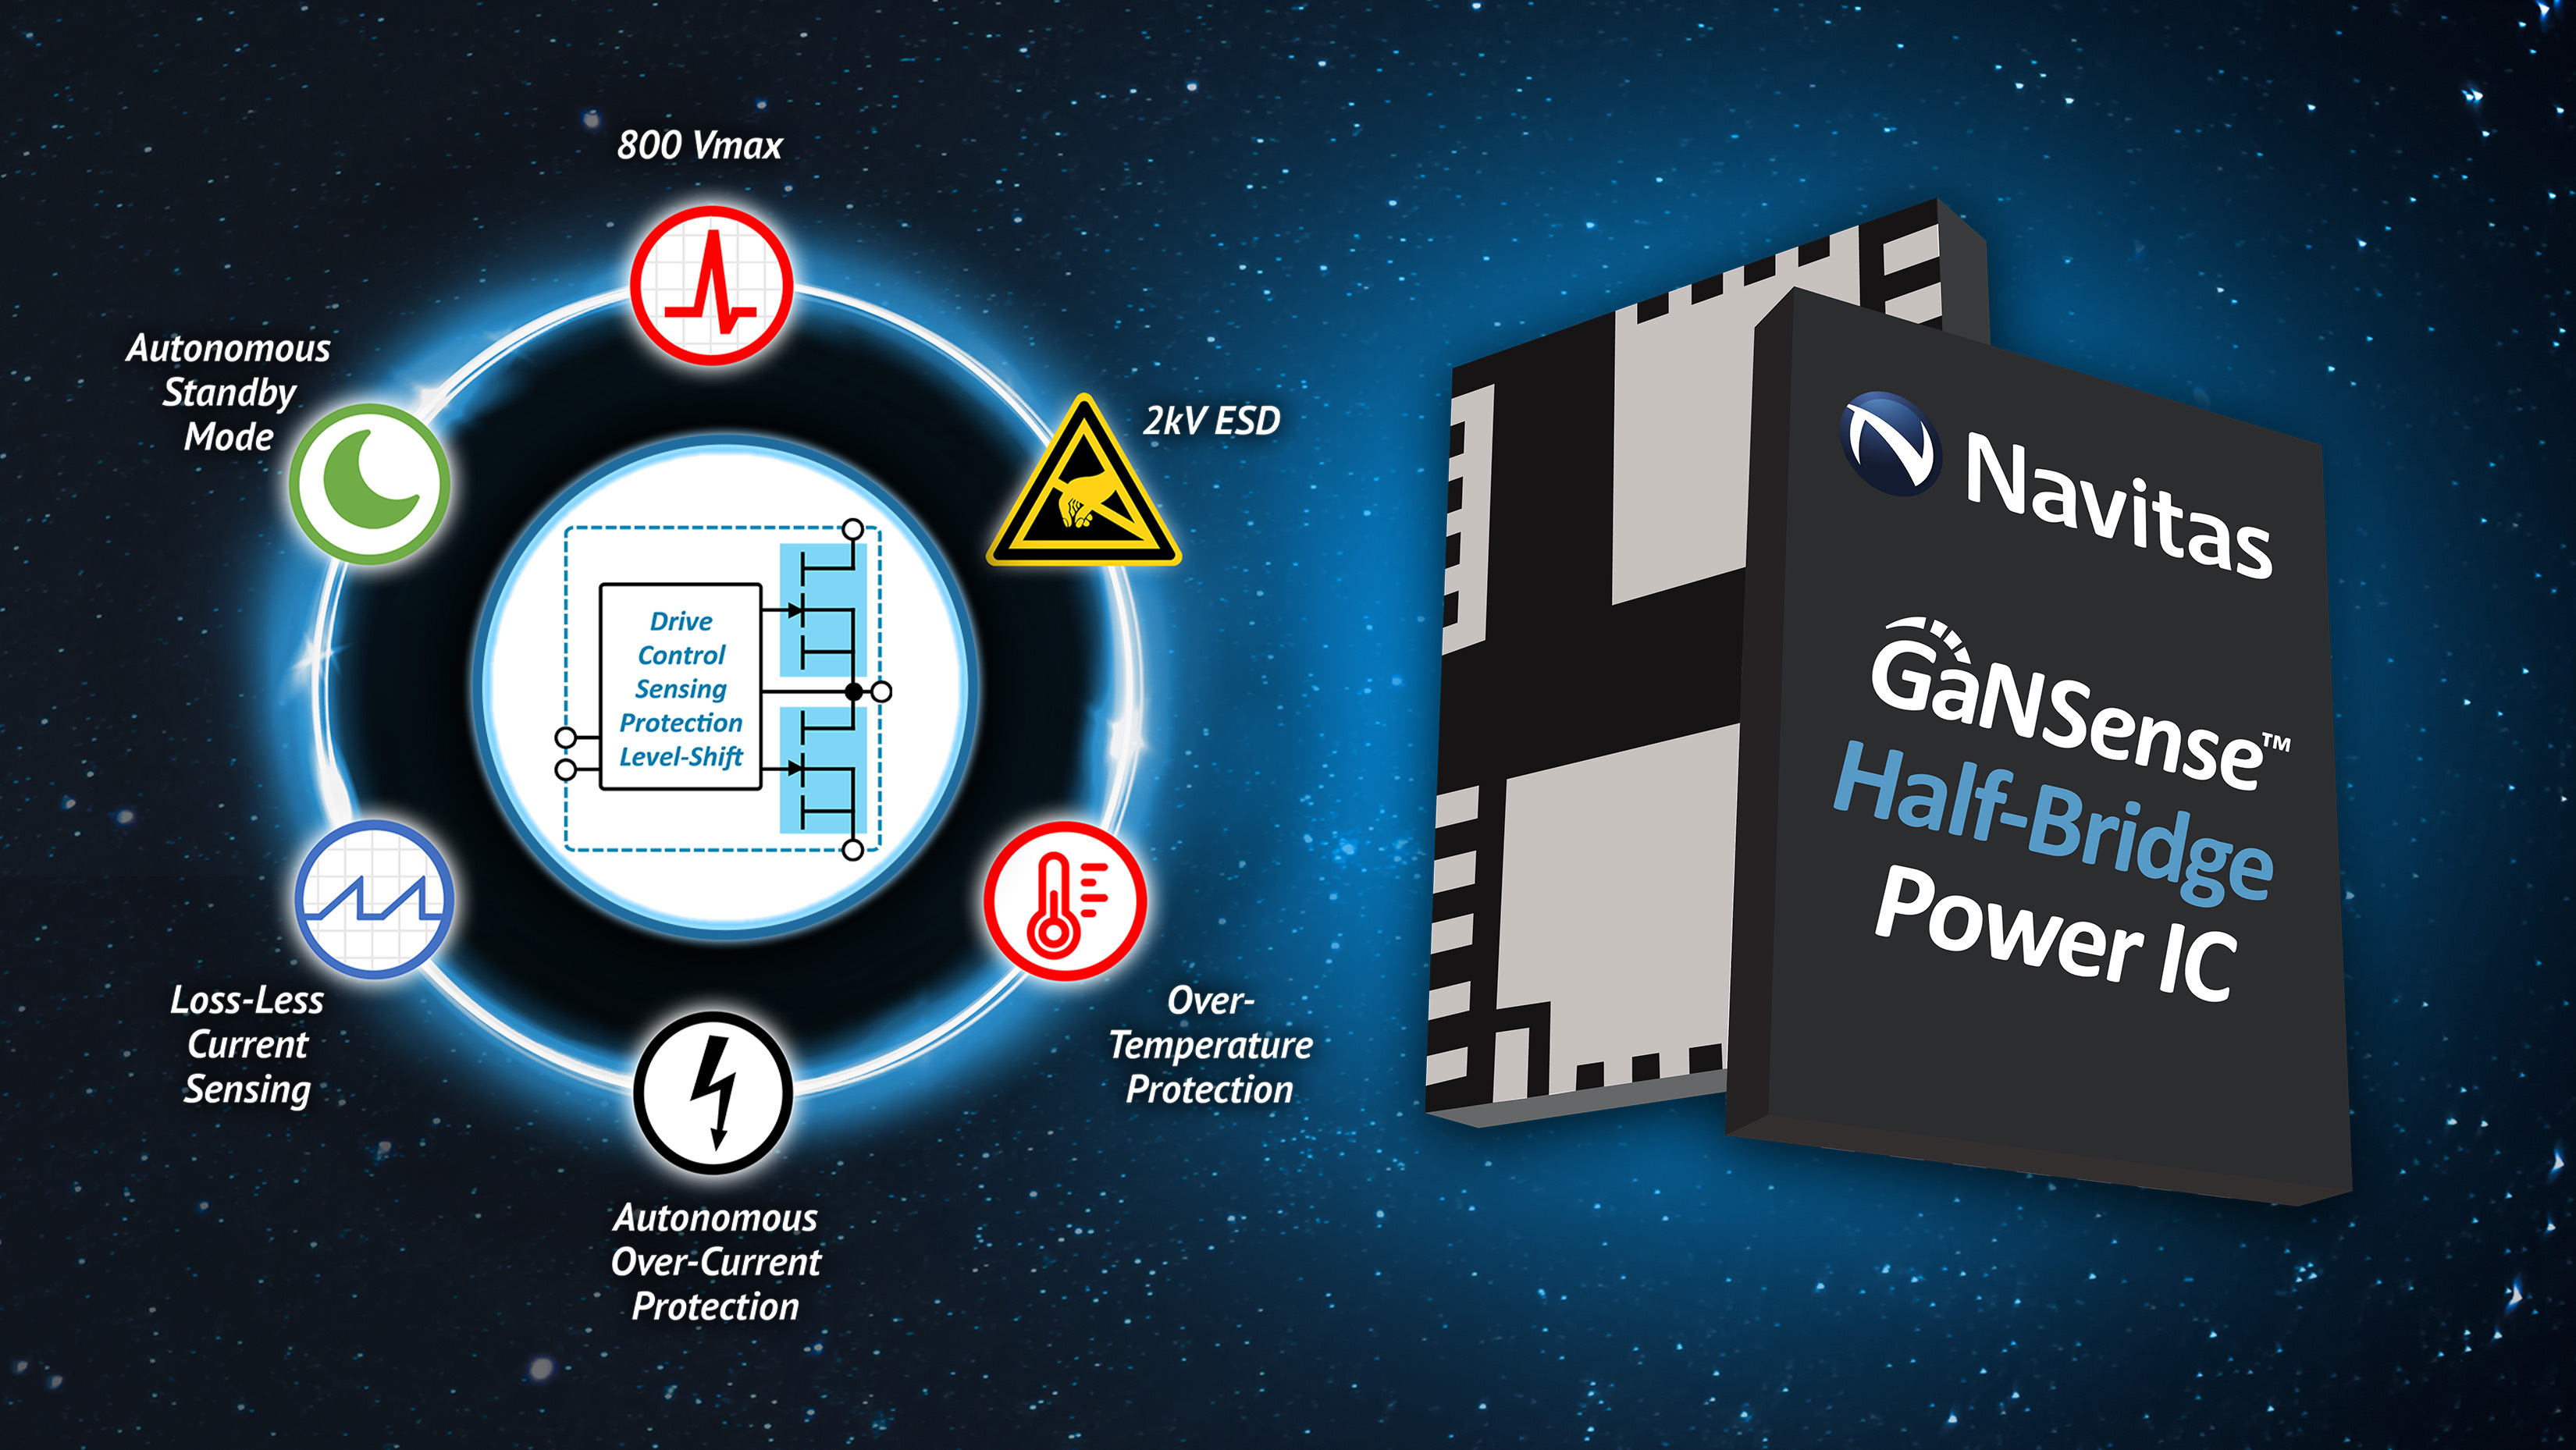 Navitas Releases Industry First GaNSense Half-Bridge Power ICs